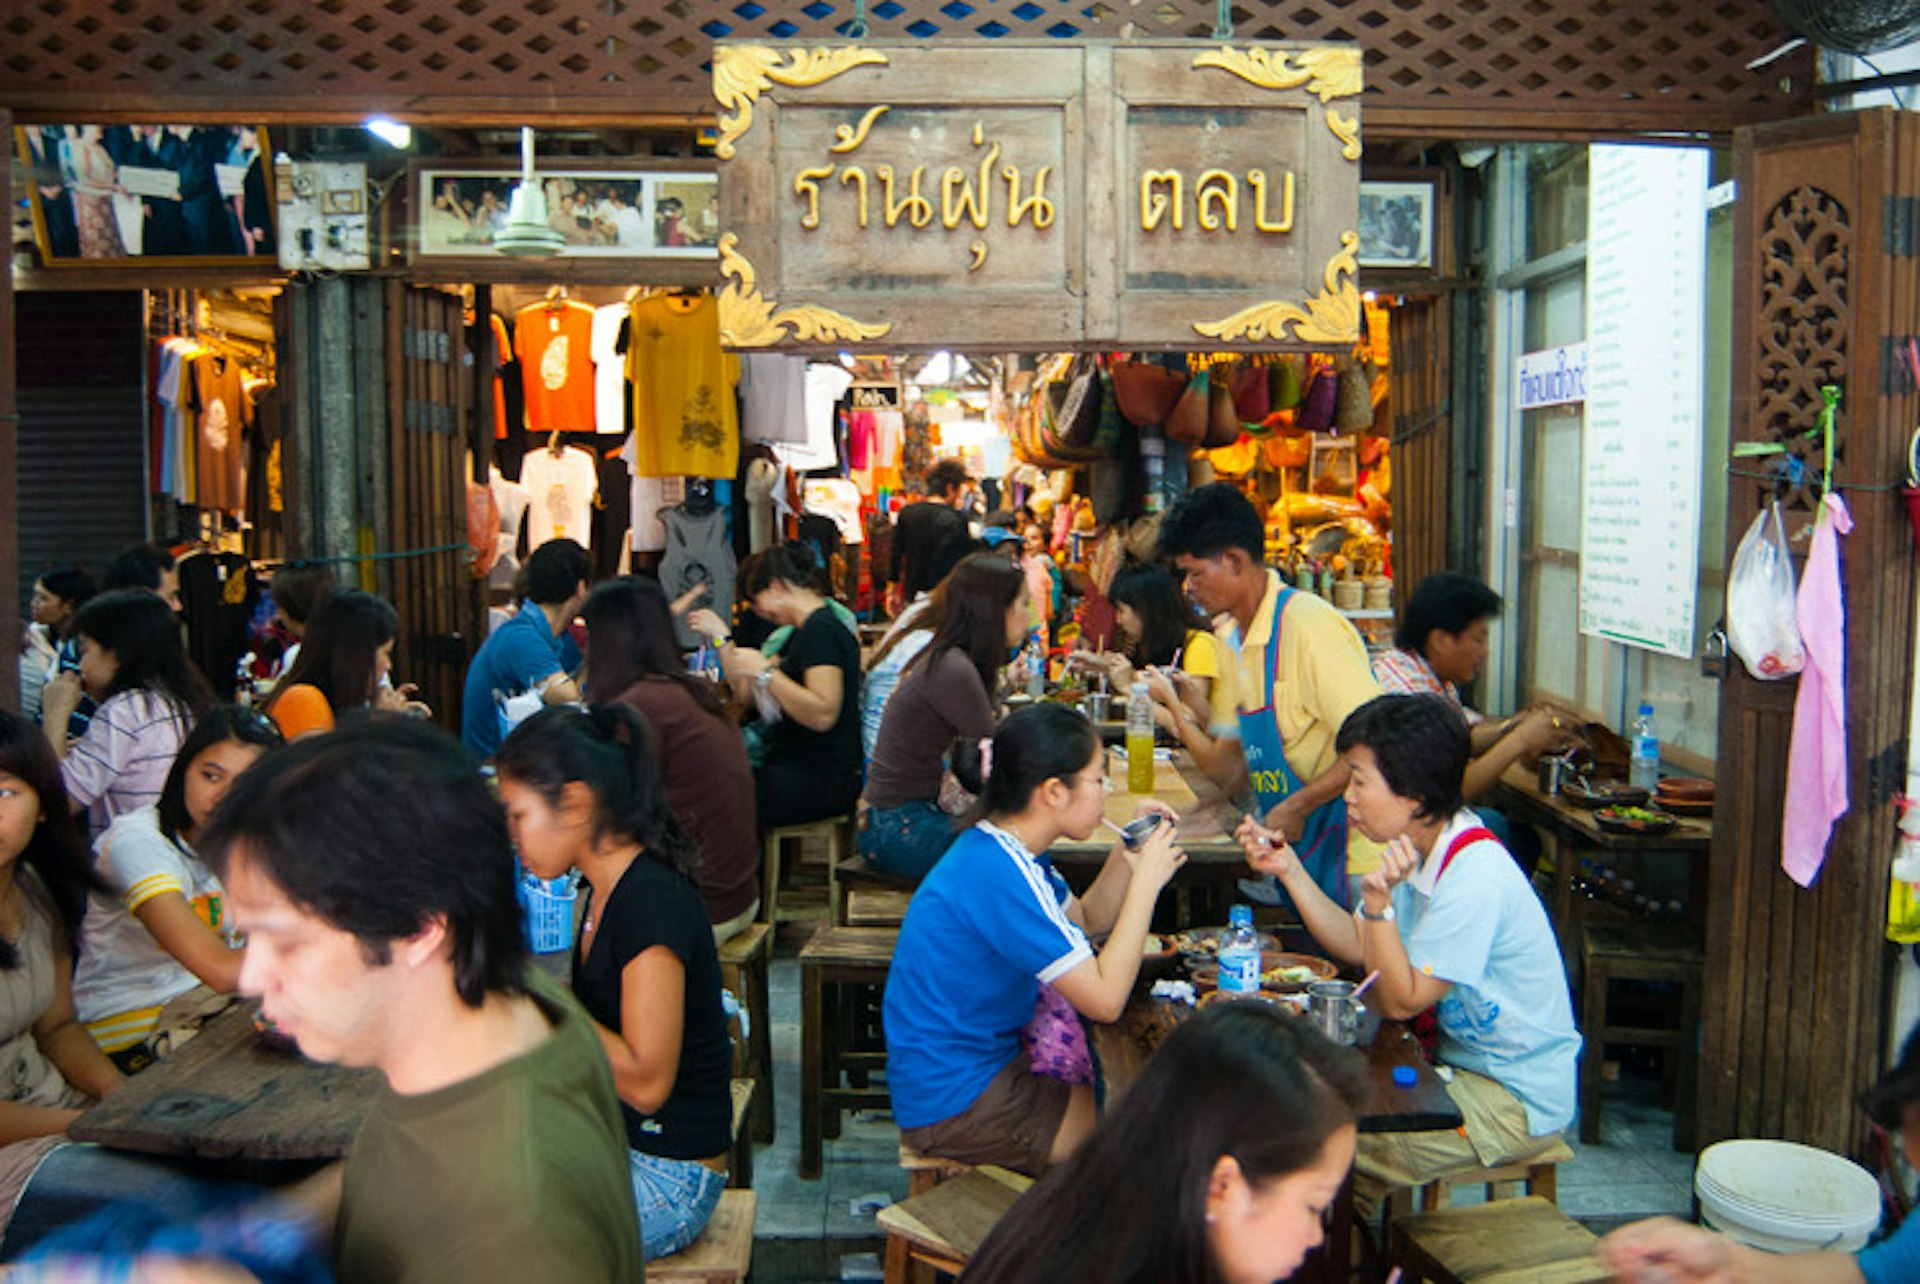 Footalop, a restaurant serving rustic Thai dishes at Bangkok’s Chatuchak Weekend Market. Image by Austin Bush